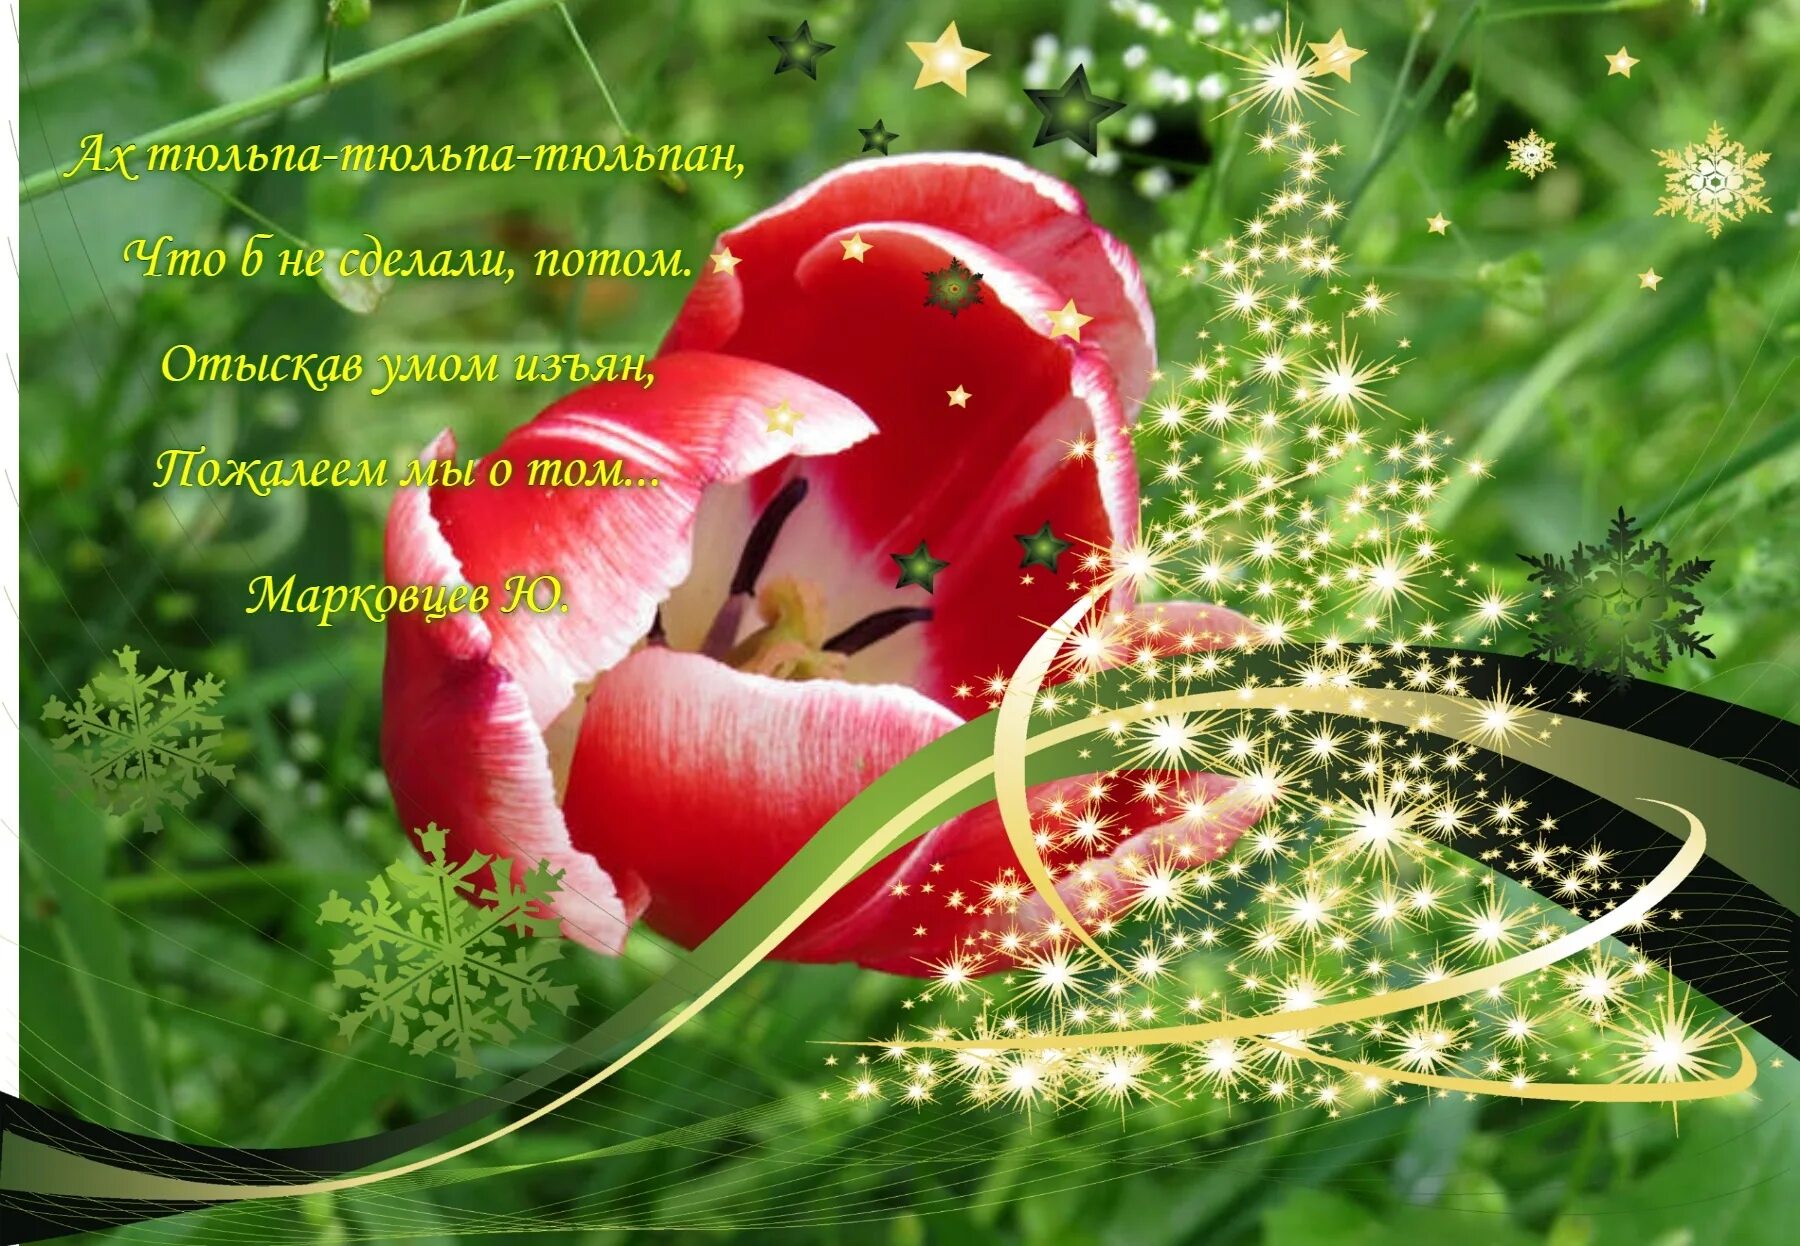 Стихи про тюльпаны. Красивые стихи про тюльпаны и весну. Весной тюльпаны стихи.